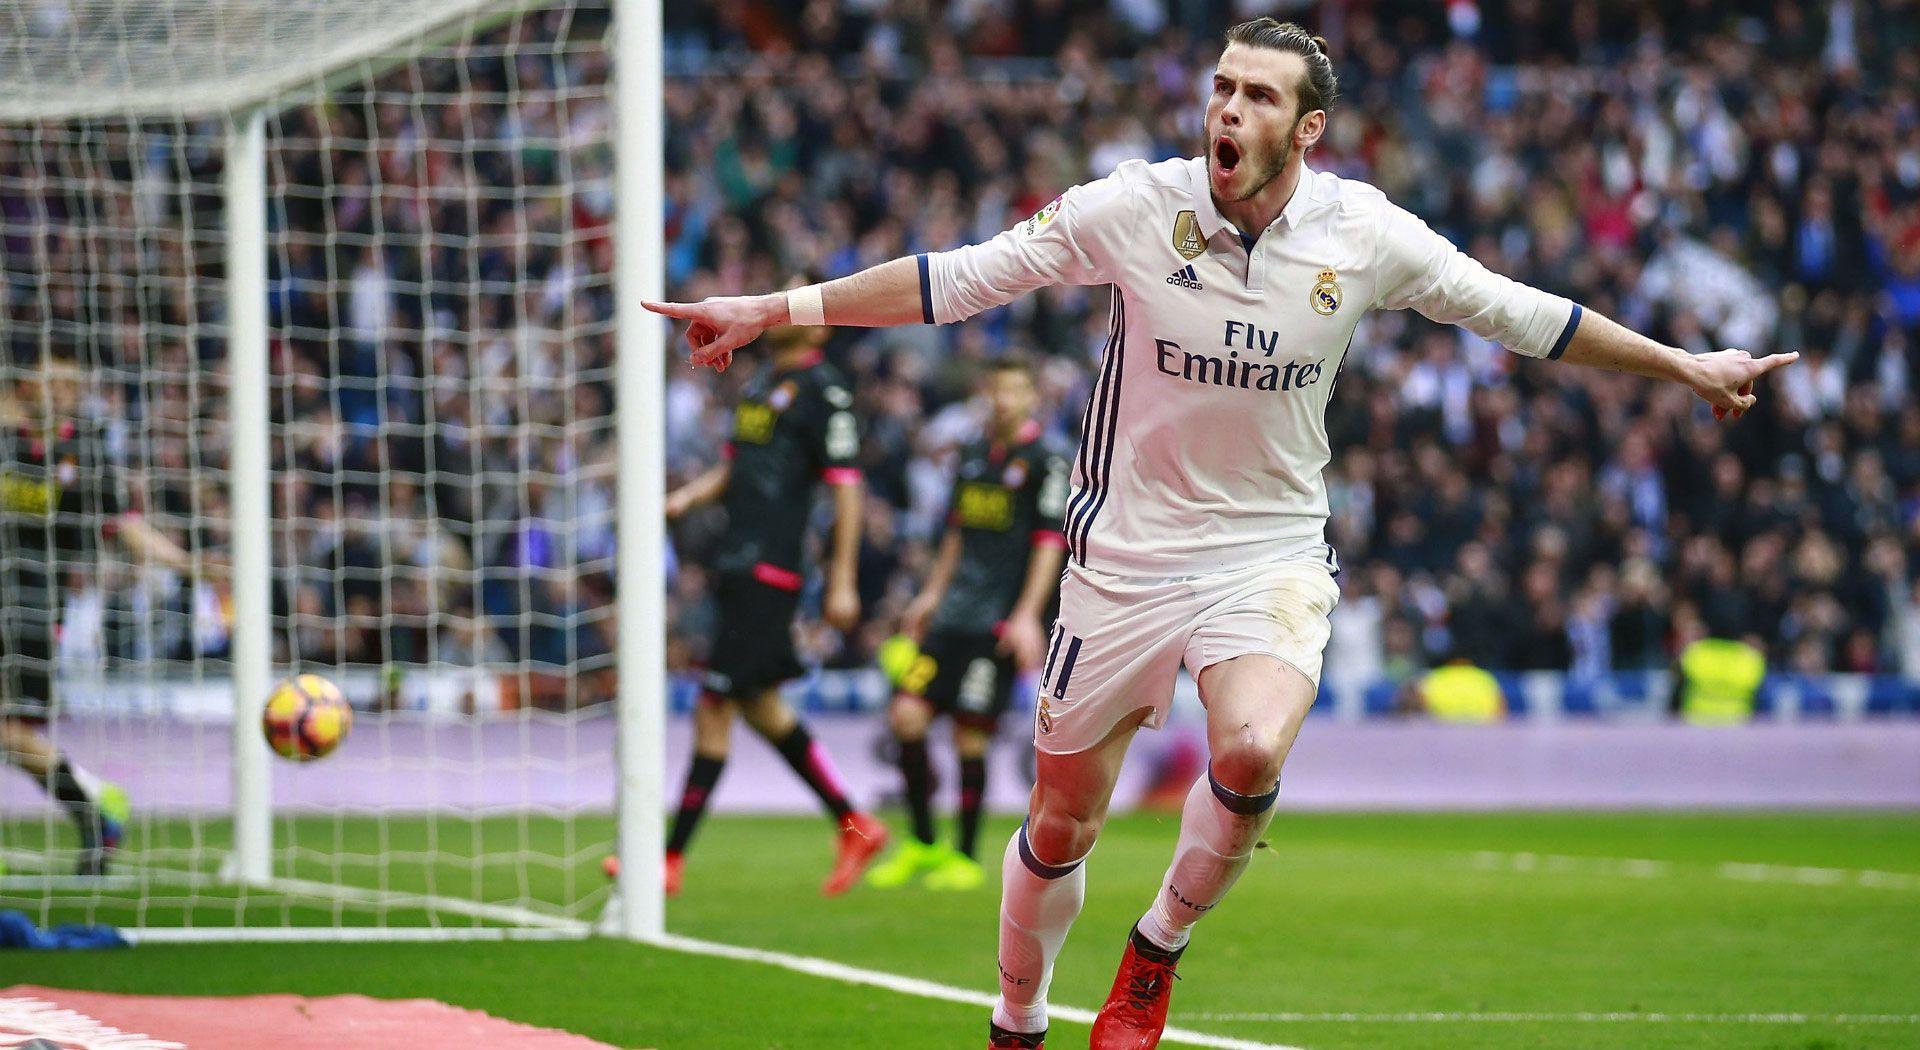 Latest Gareth Bale HD Wallpaper Image Photo 2018 Free